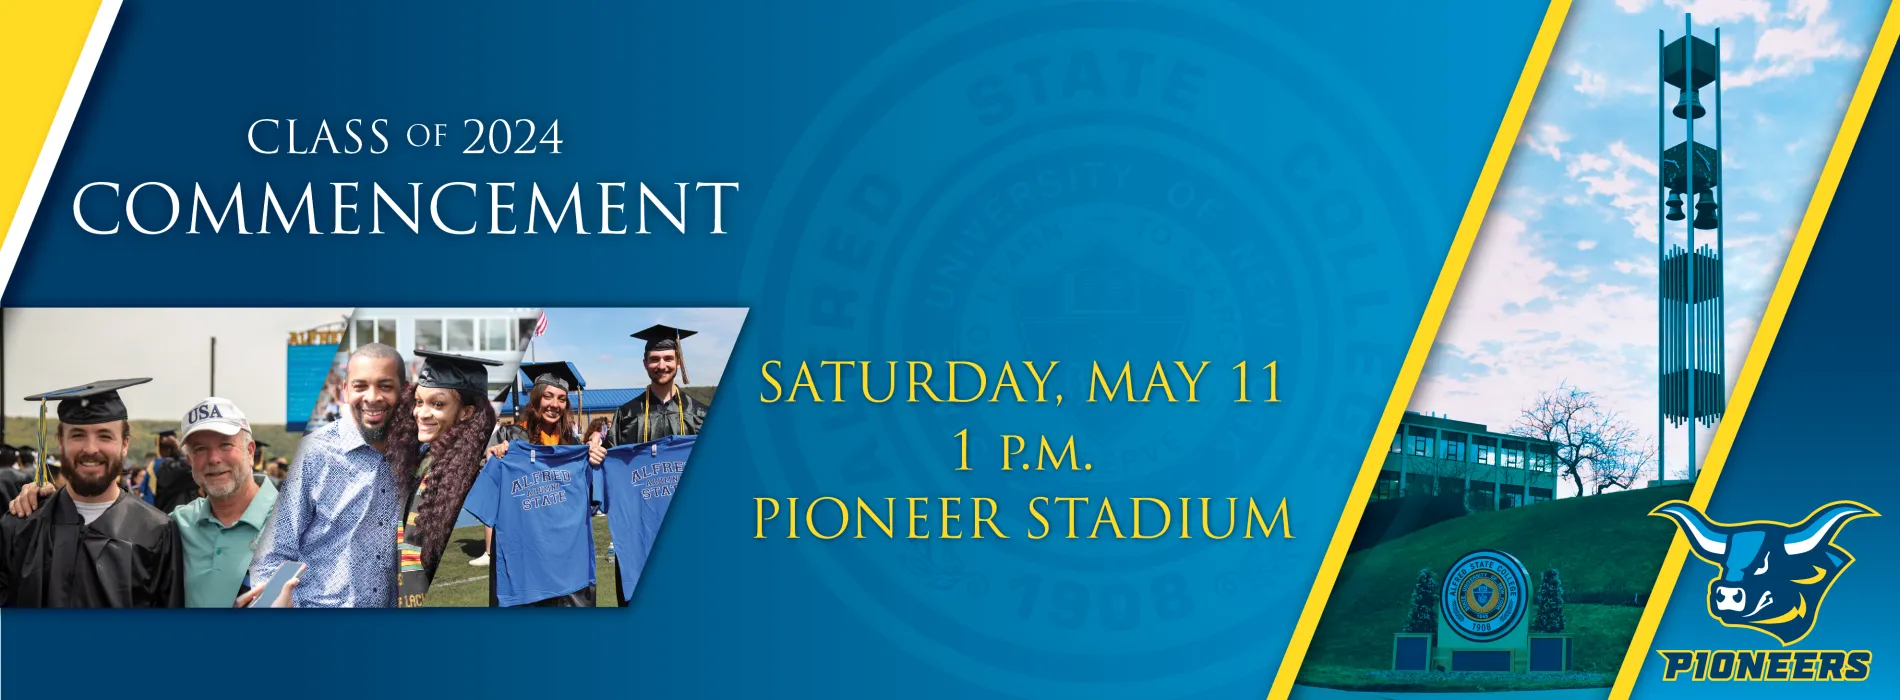 Class of 2024 Commencement - Saturday, May 11, 1 p.m., Pioneer Stadium